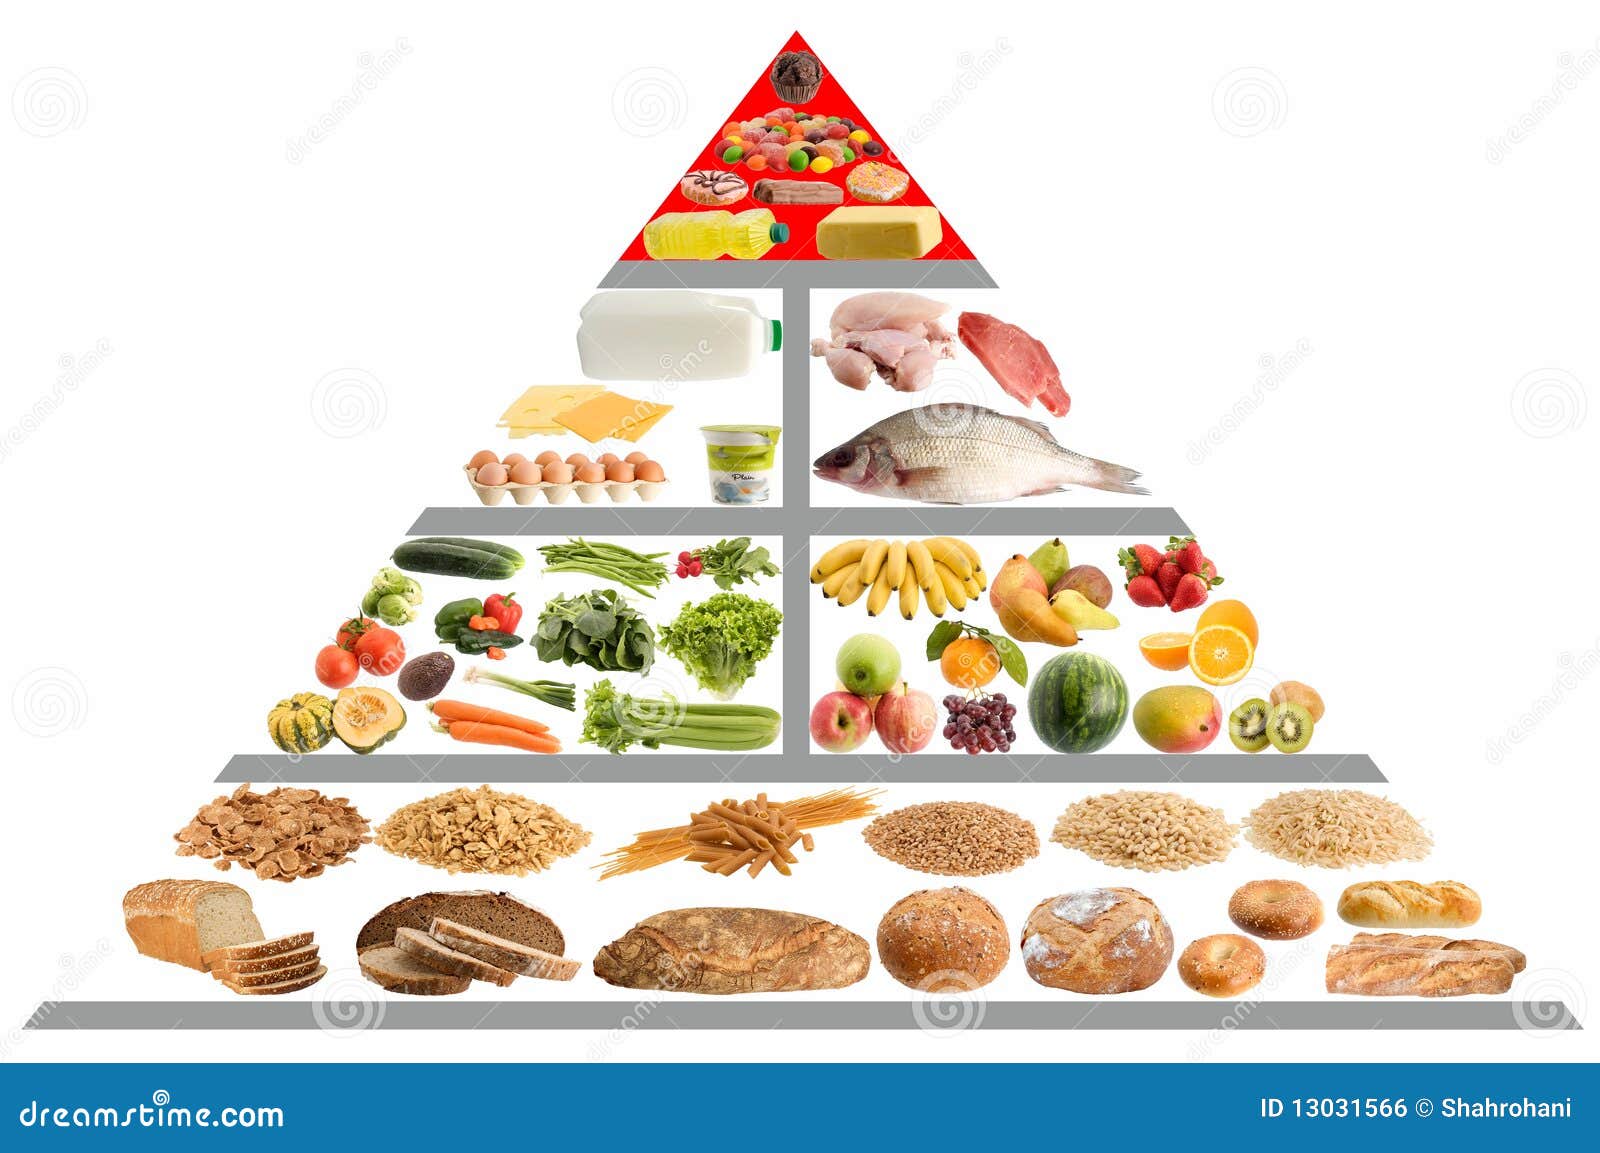 Food Pyramid Guide Royalty Free Stock Image - Image: 13031566